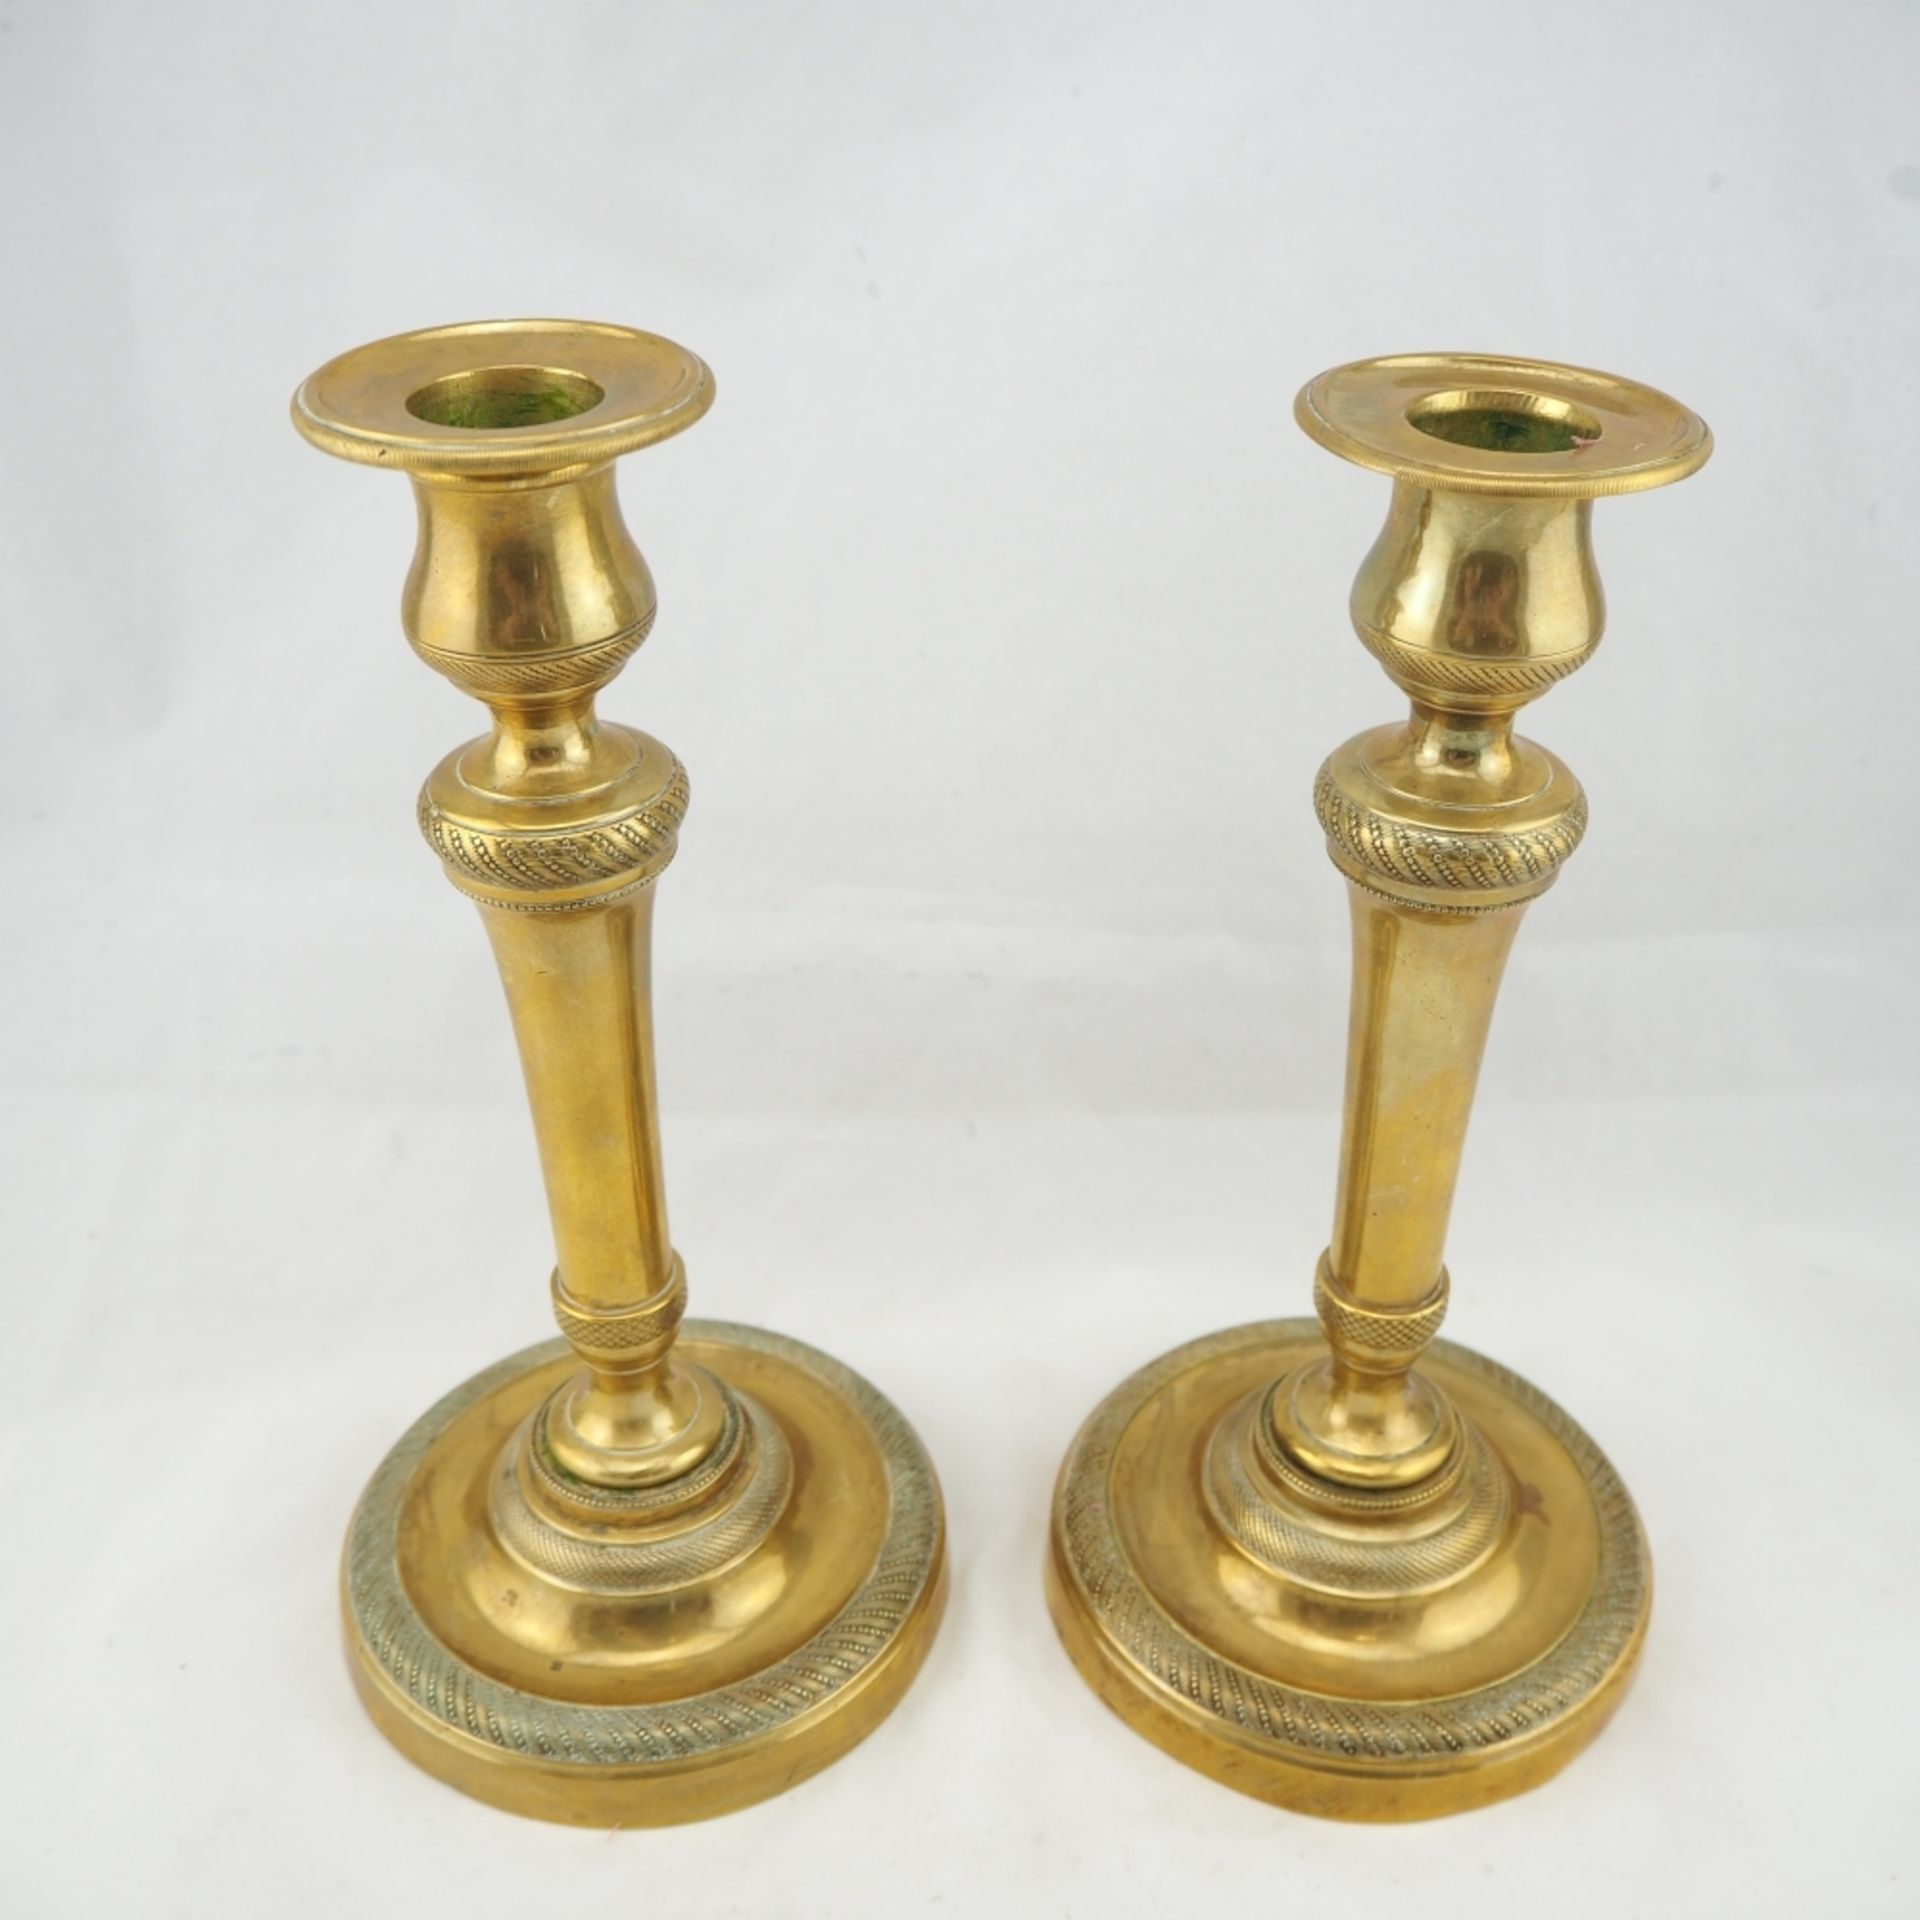 Paar Leuchter, um 1800klassizistisches Paar Leuchter aus Messing oder Bronze, vergoldet. - Image 2 of 3